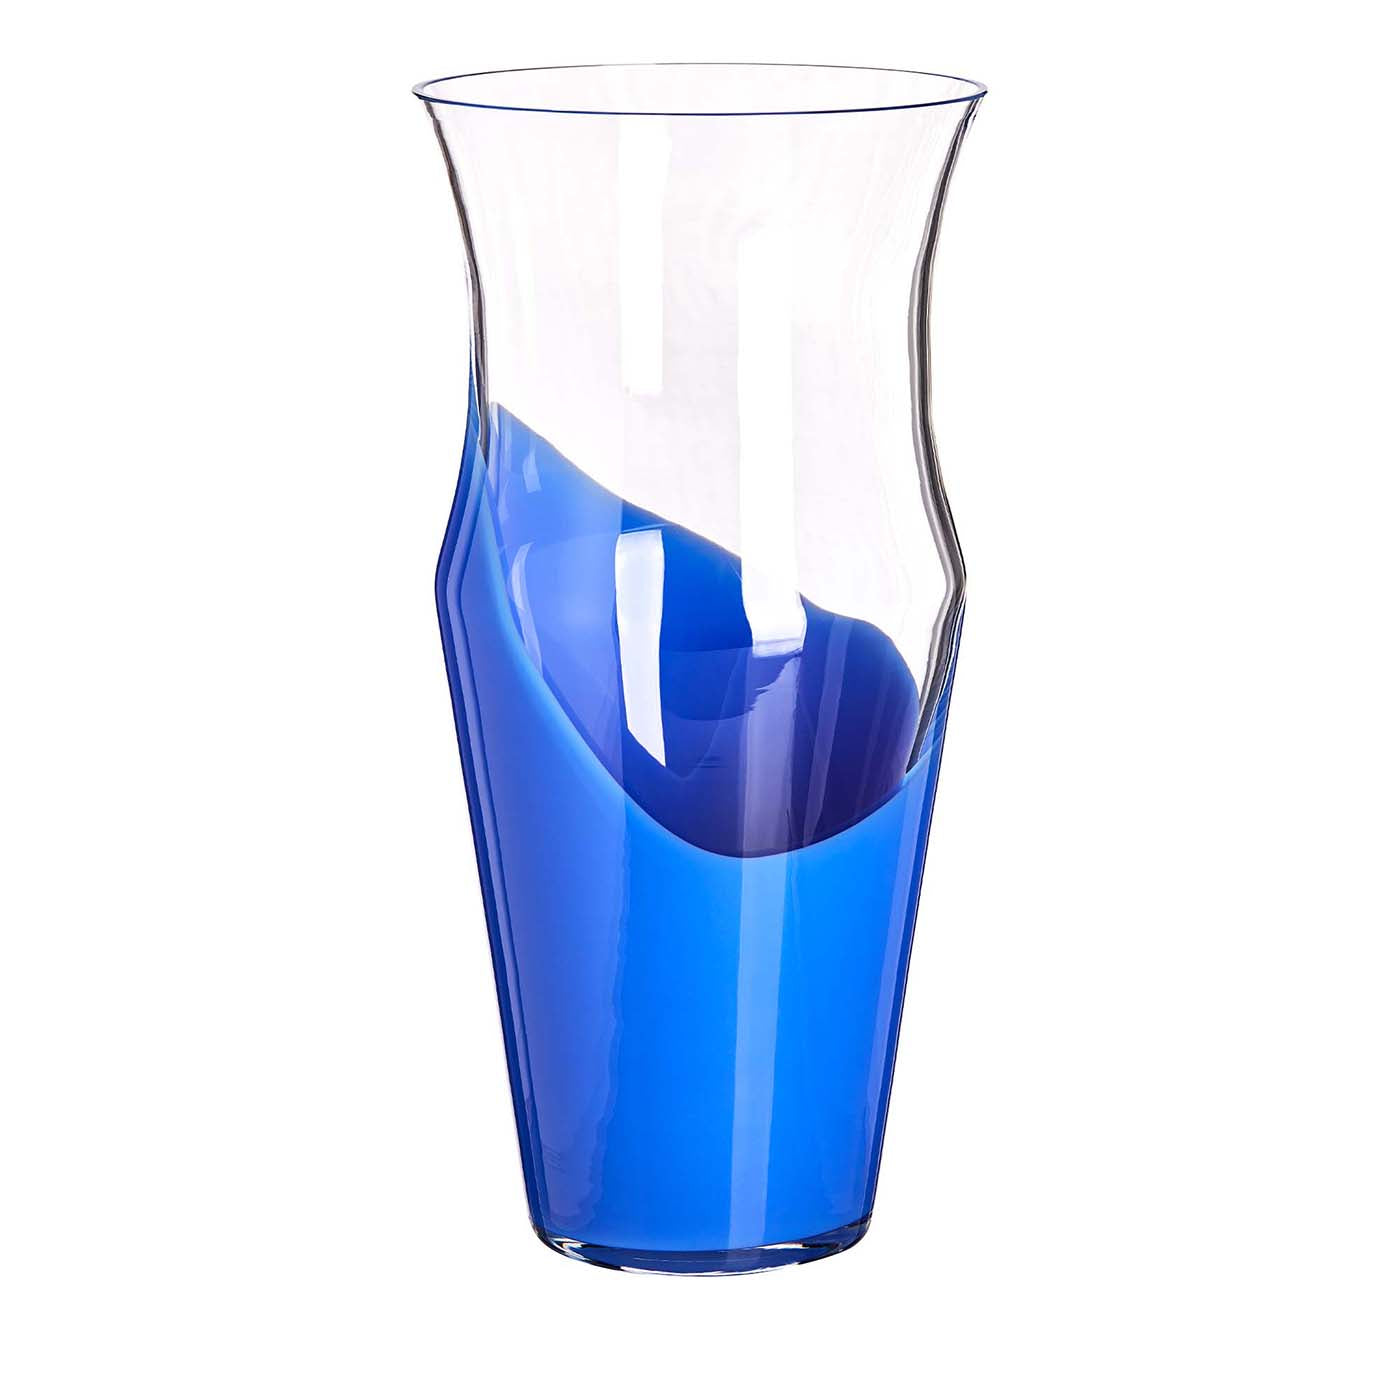 Blaue und transparente Monocromo-Vase von Carlo Moretti - Hauptansicht